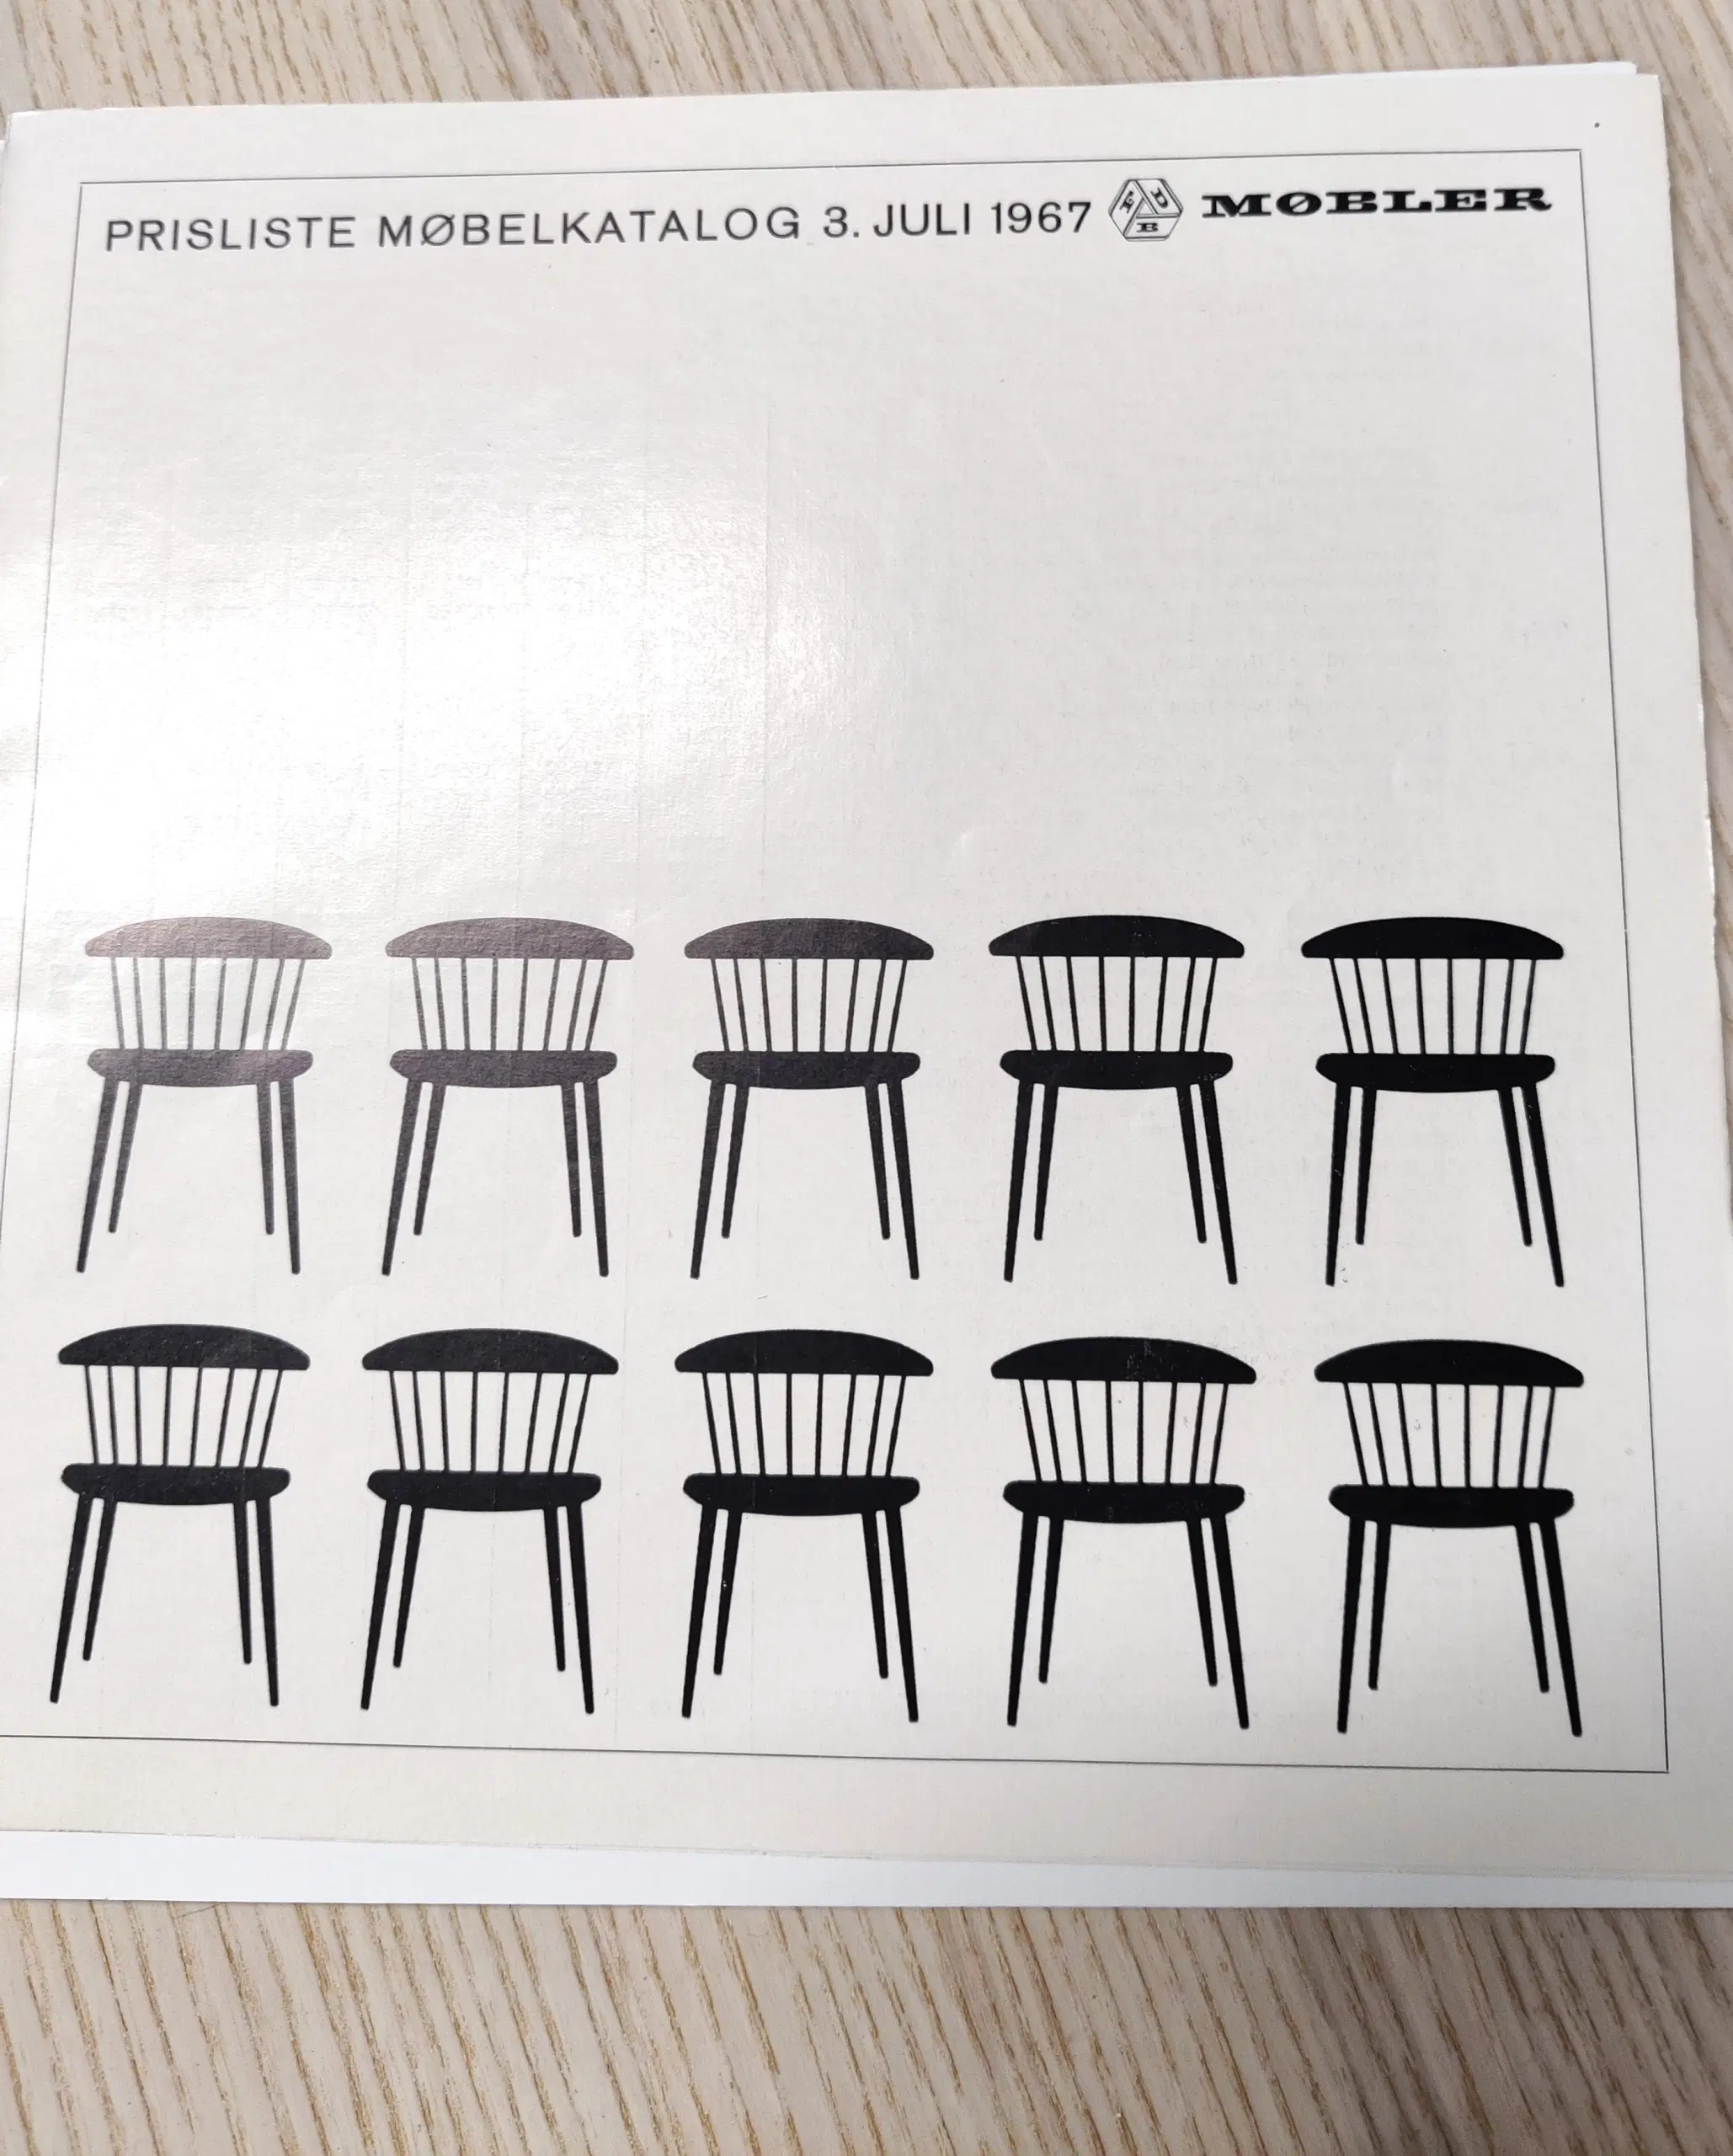 FDB Møbler - Katalog 1967 med prisliste 48 sider